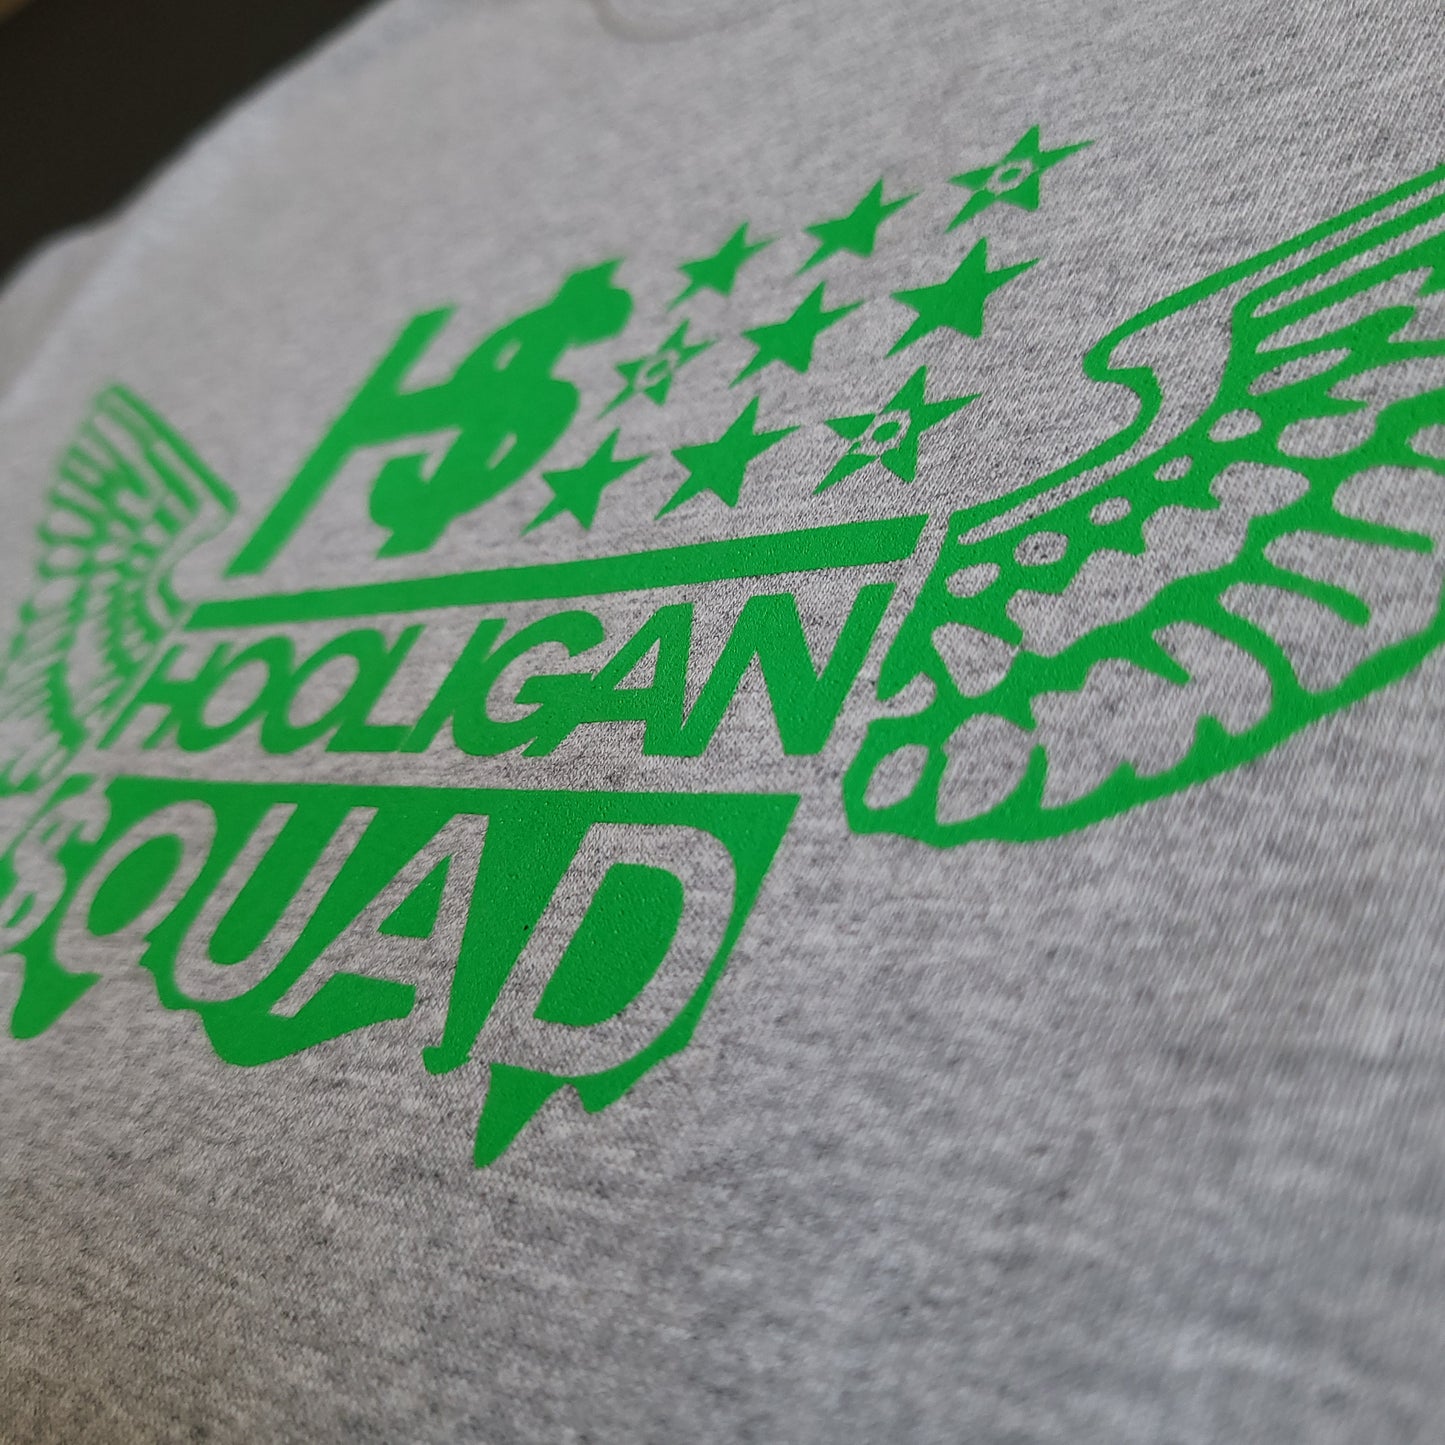 Hooligan Squad - Neon Dr!p Unisex T-Shirt